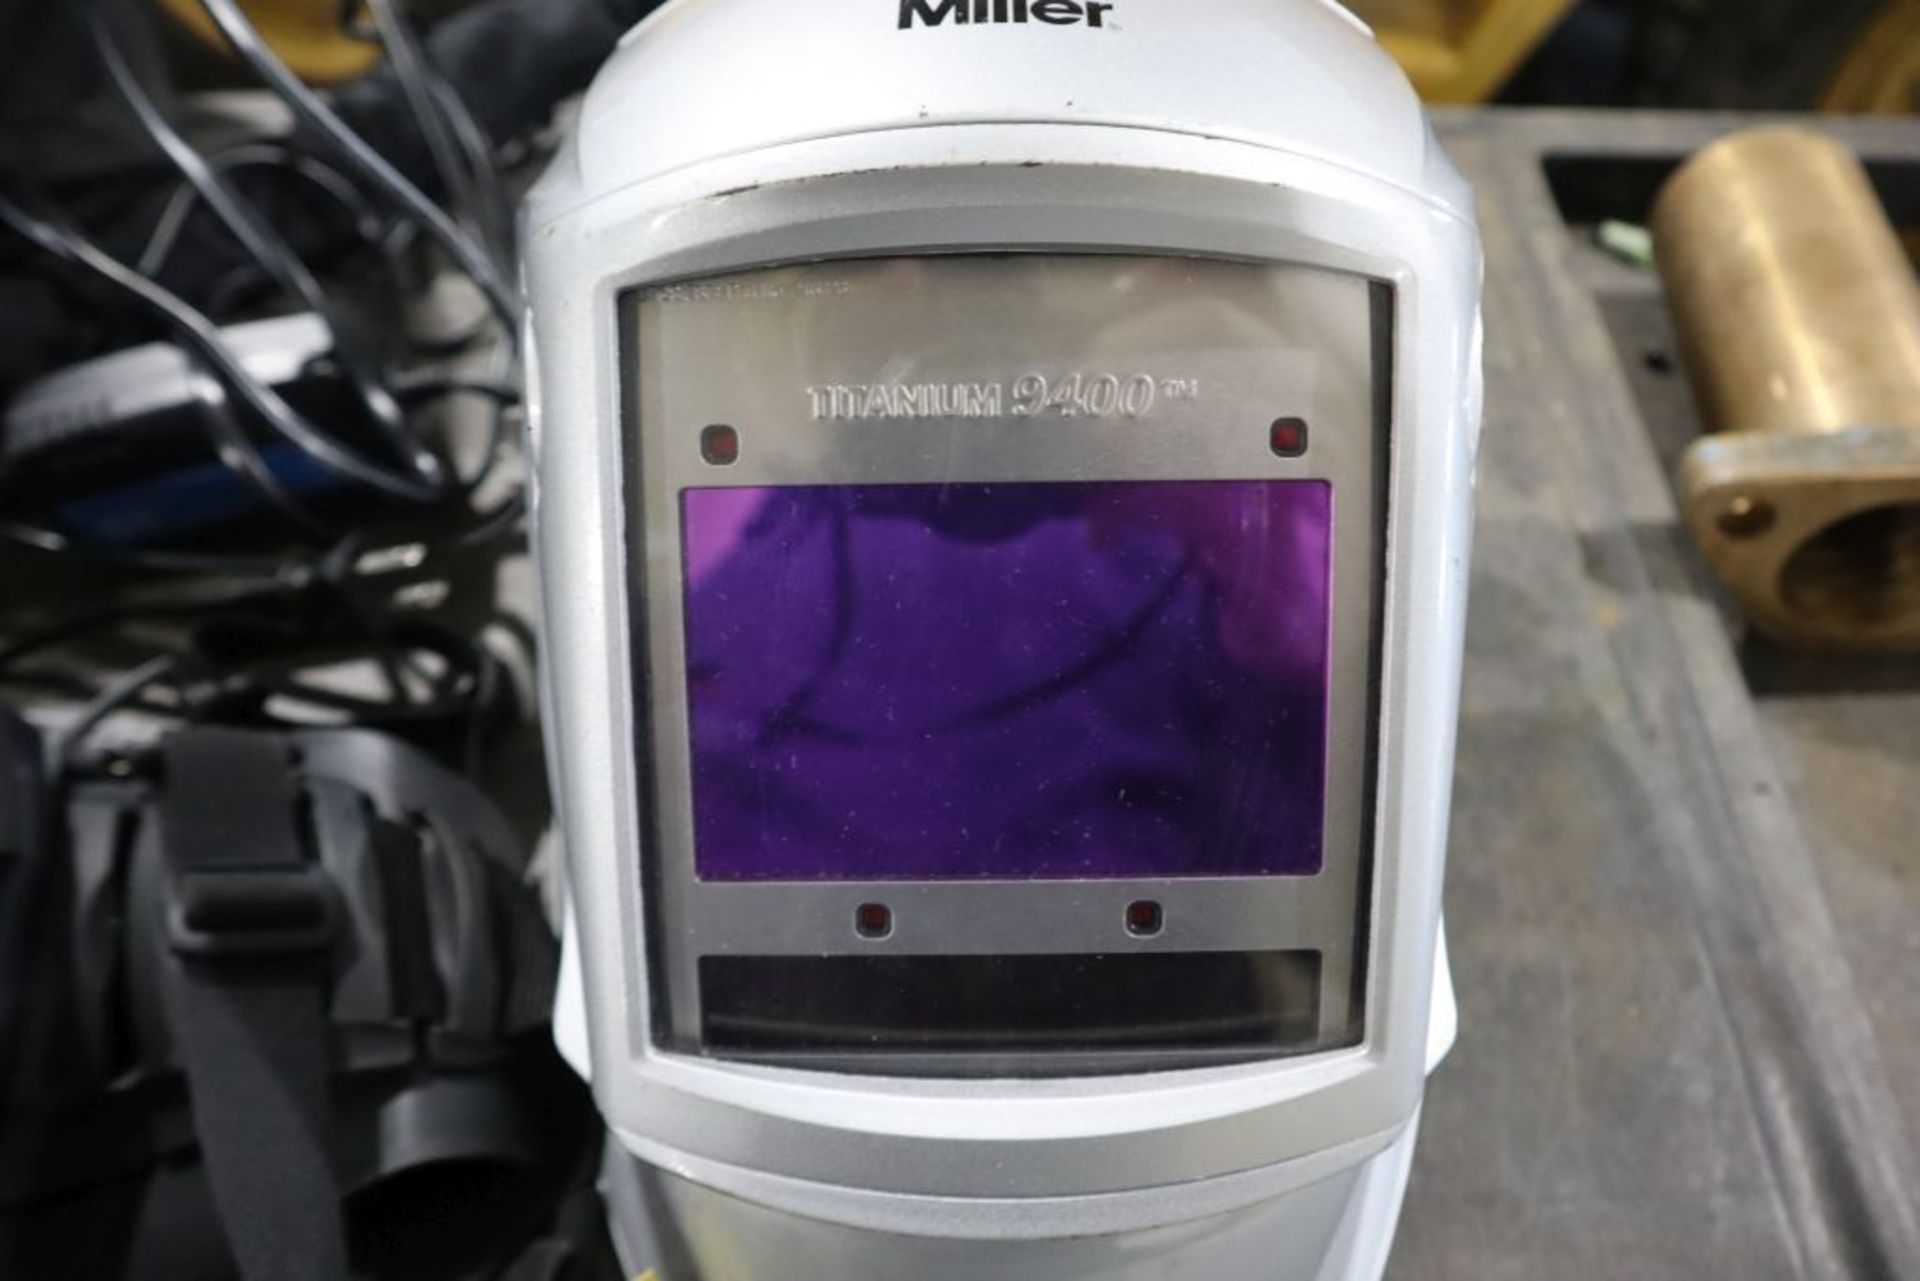 Miller Power air purifying respirator helmet Model 9400 - Image 2 of 4